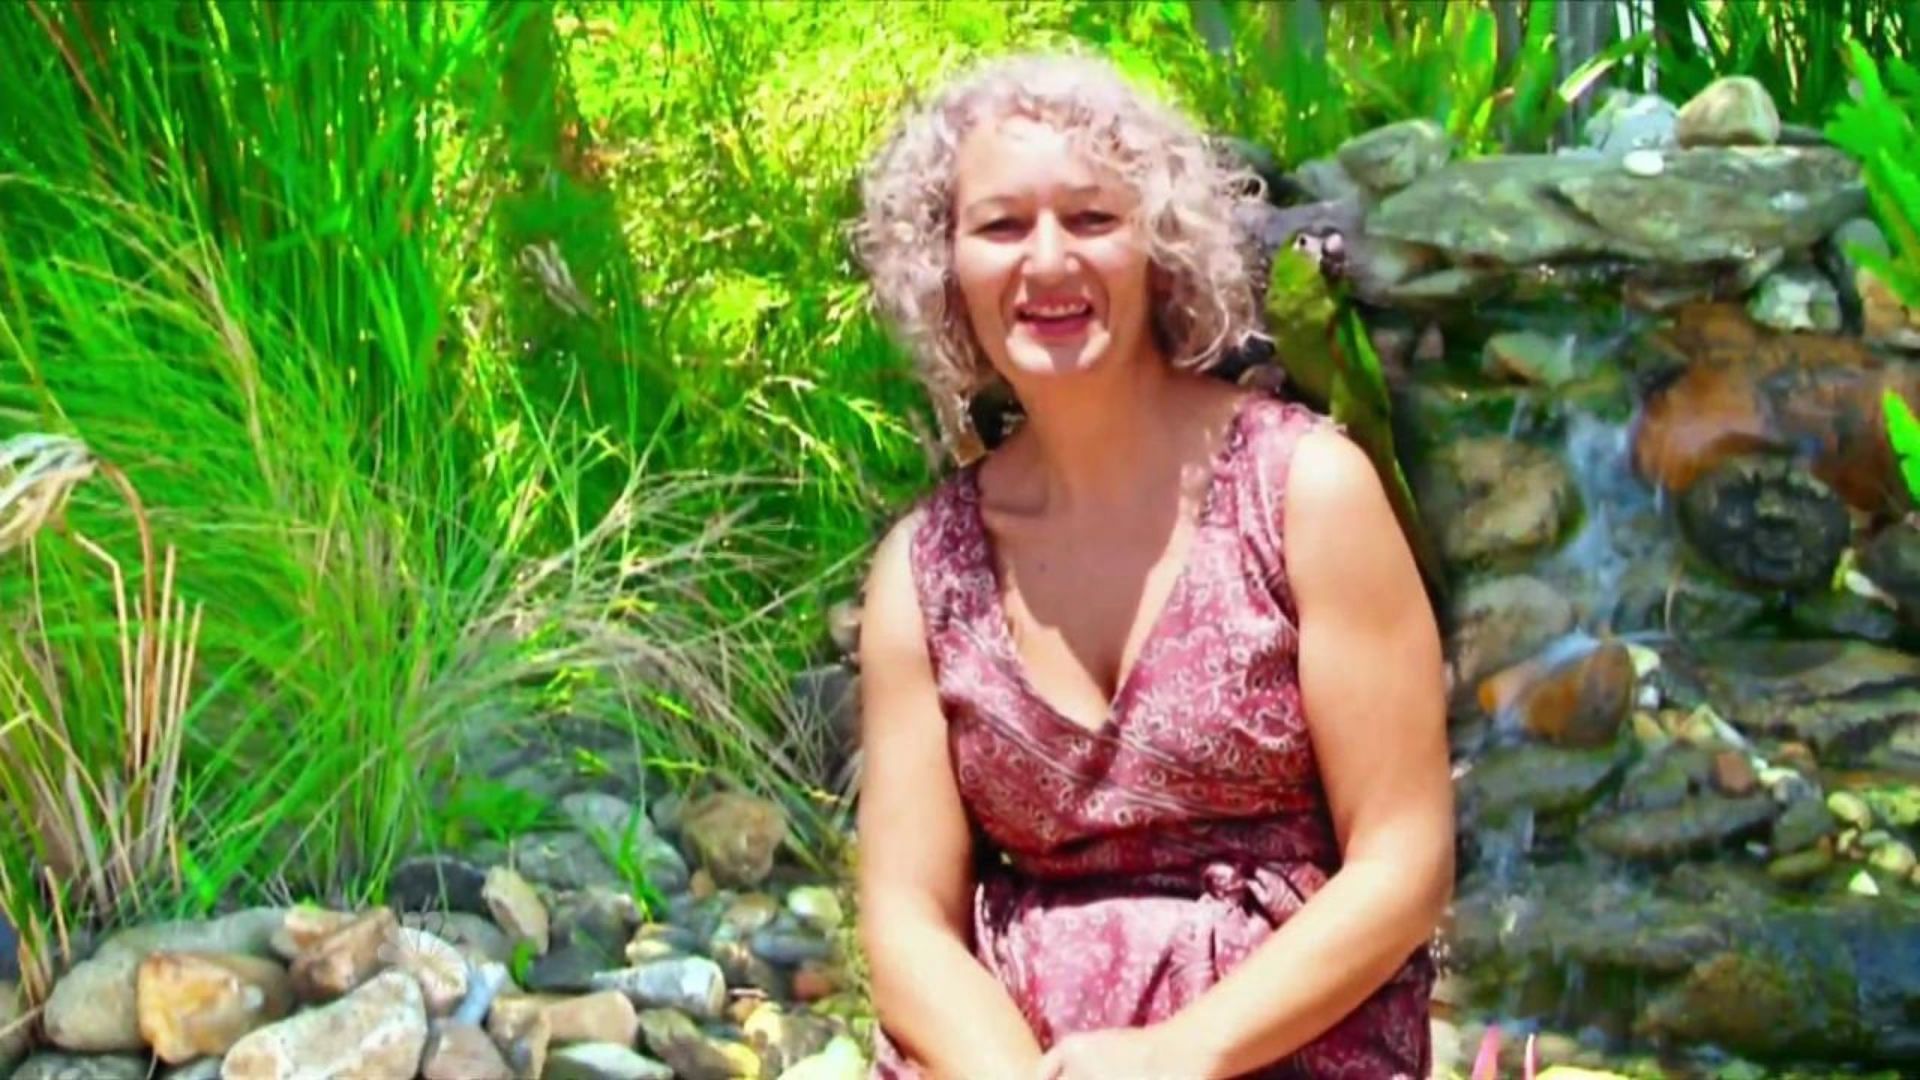 In 2008, Sabine Buehler, a resident of Anna Maria Island, was murdered by her then-boyfriend William Cumber (Image via NBC)